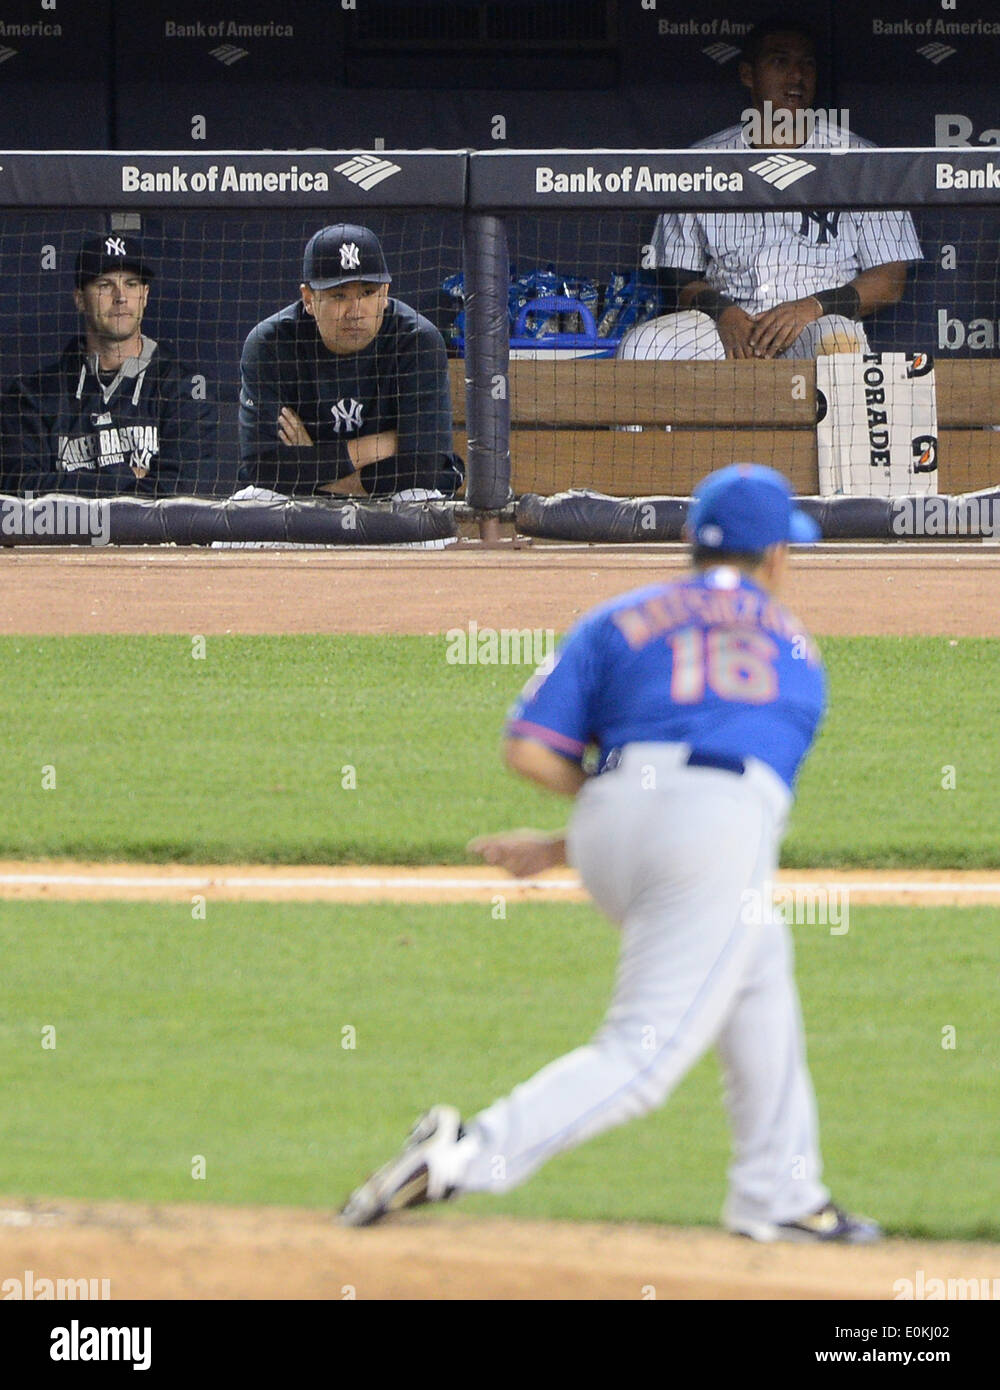 Masahiro Tanaka (Yankees), Daisuke Matsuzaka (METS), 13 maggio 2014 - MLB : Masahiro Tanaka dei New York Yankees orologi da la piroga come Daisuke Matsuzaka dei New York Mets piazzole durante il Major League Baseball gioco allo Yankee Stadium nel Bronx, New York, Stati Uniti. (Foto di AFLO) Foto Stock